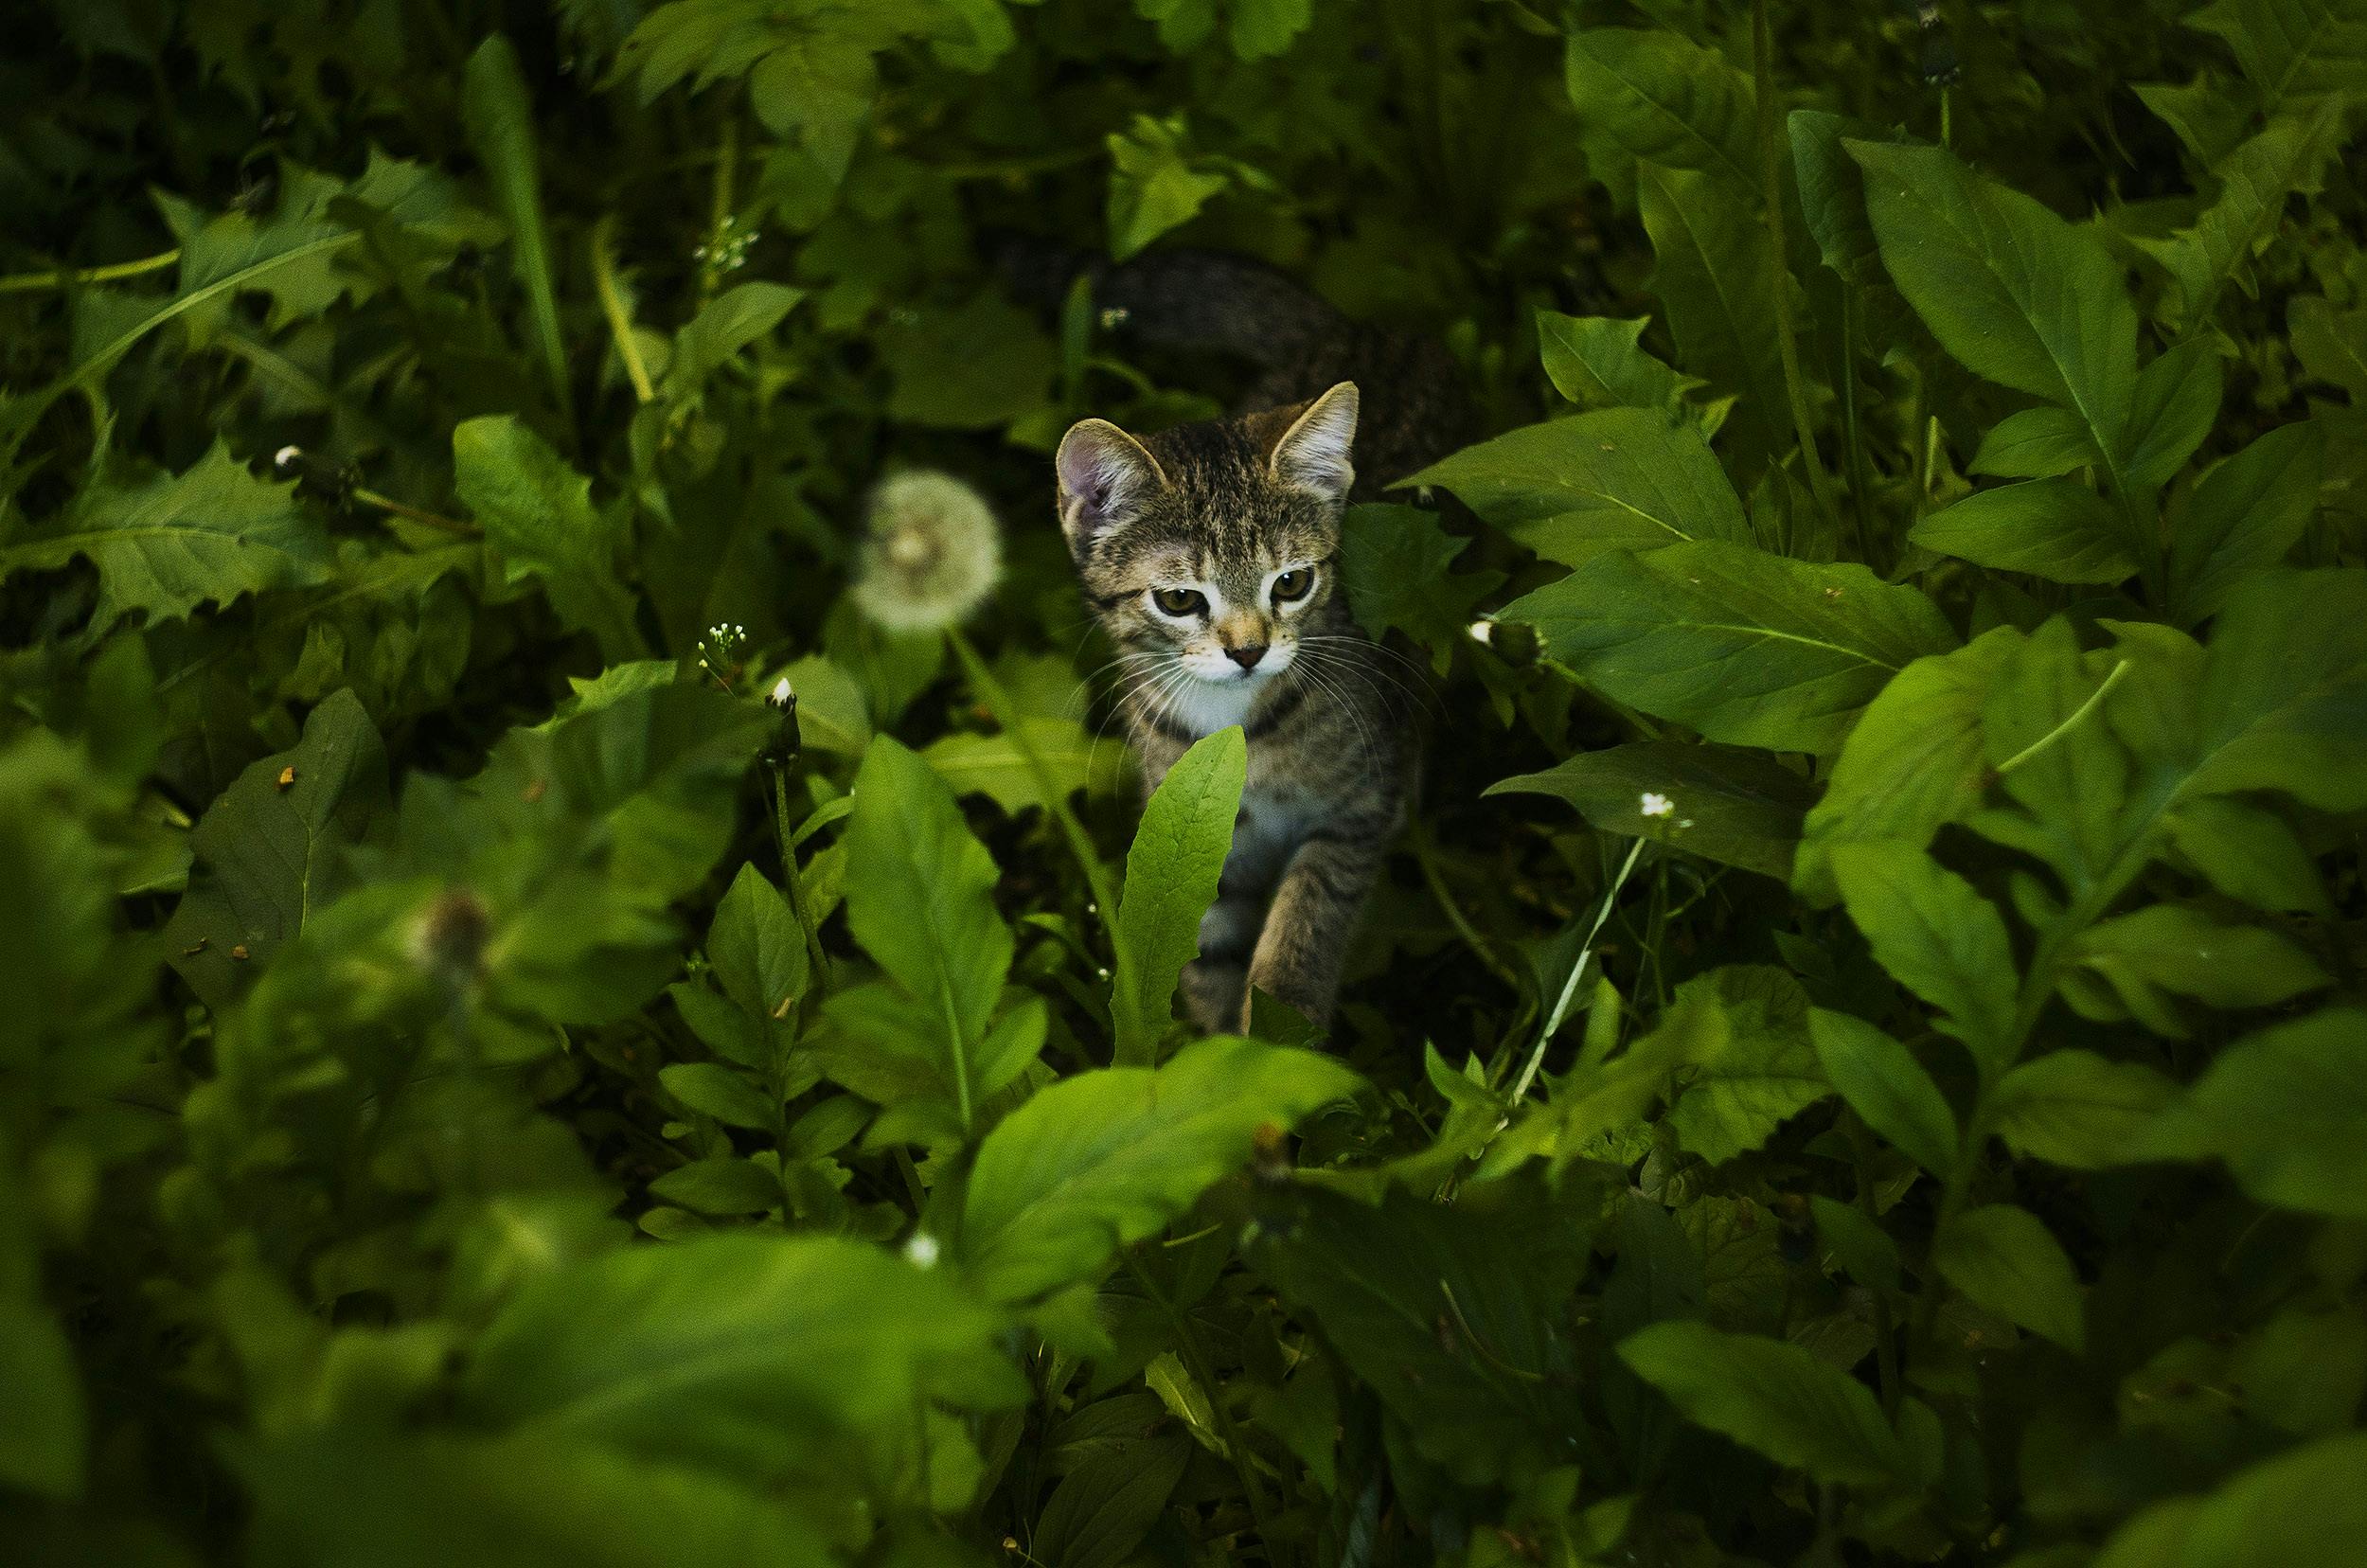 Green Eyes Cat Photos, Download Free Green Eyes Cat Stock Photos & HD Images